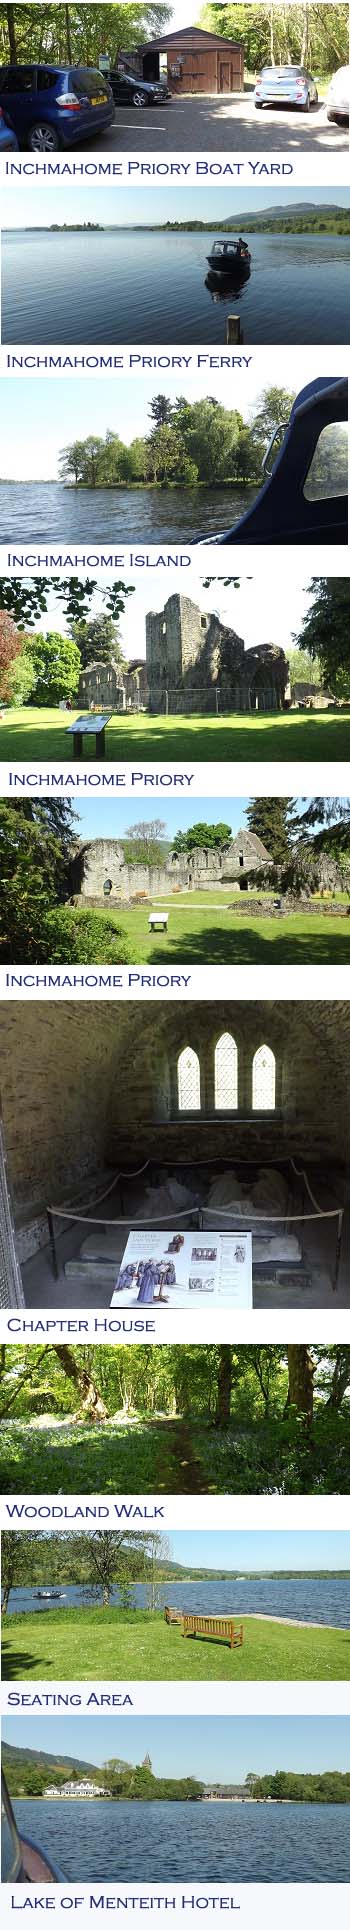 Inchmahome Priory Photos